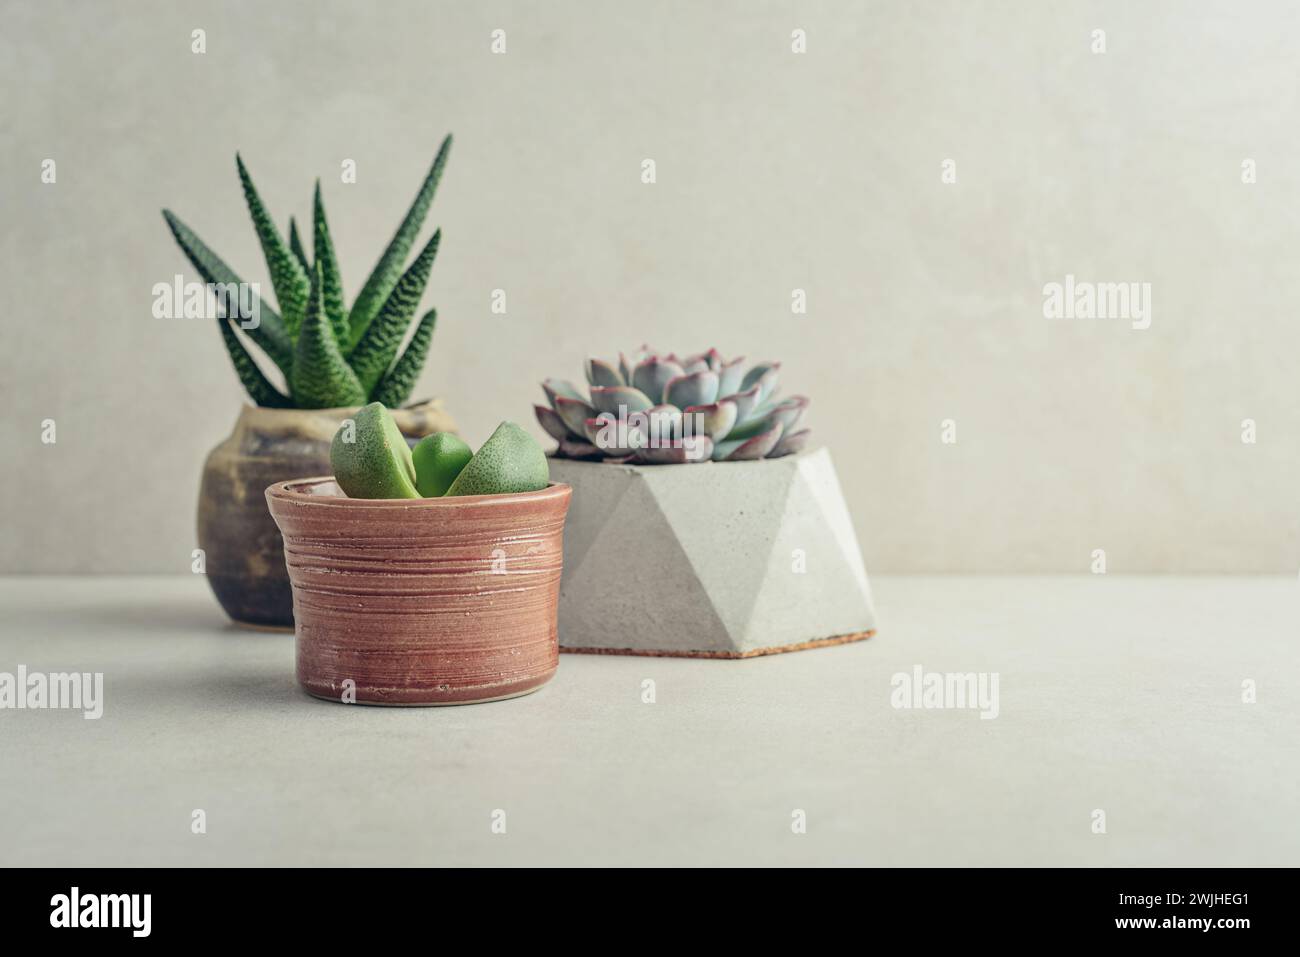 Haworthia, Lithops, Echeveria, Aloe. Houseplants (succulents) in pots on a light background Stock Photo